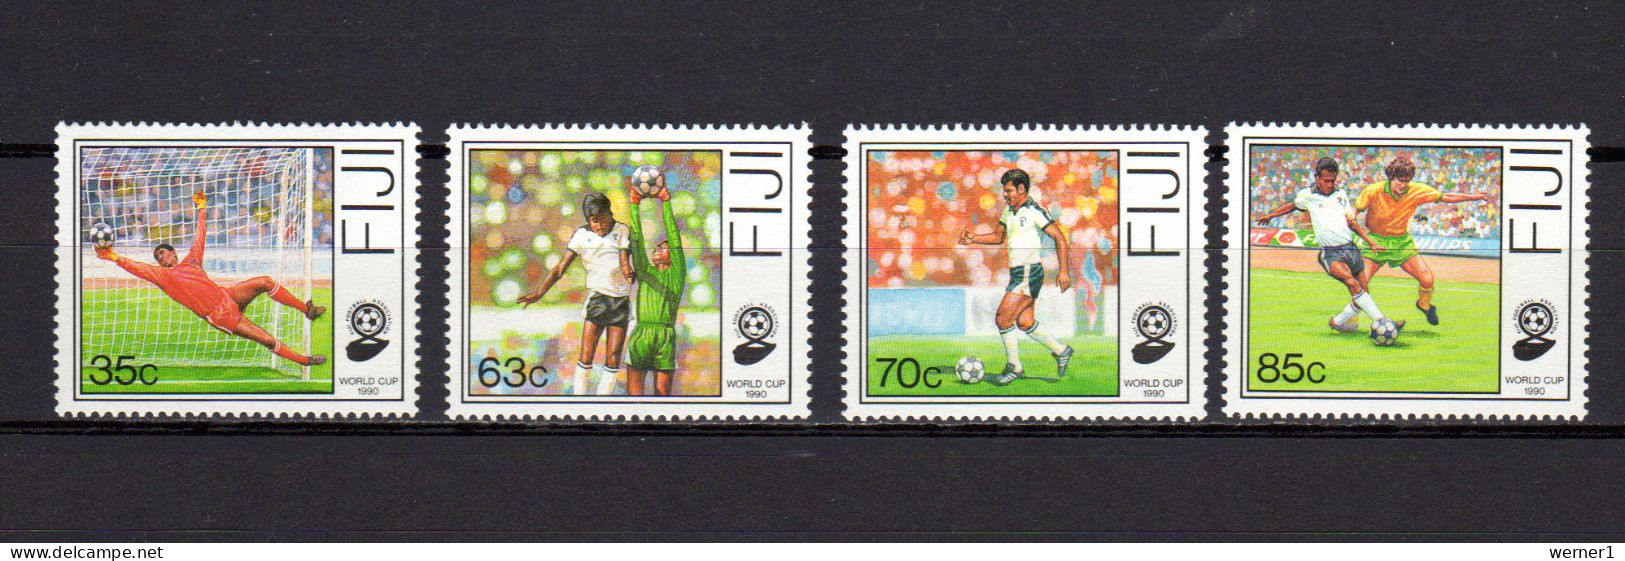 Fiji Islands 1989 Football Soccer World Cup Set Of 4 MNH - 1990 – Italy